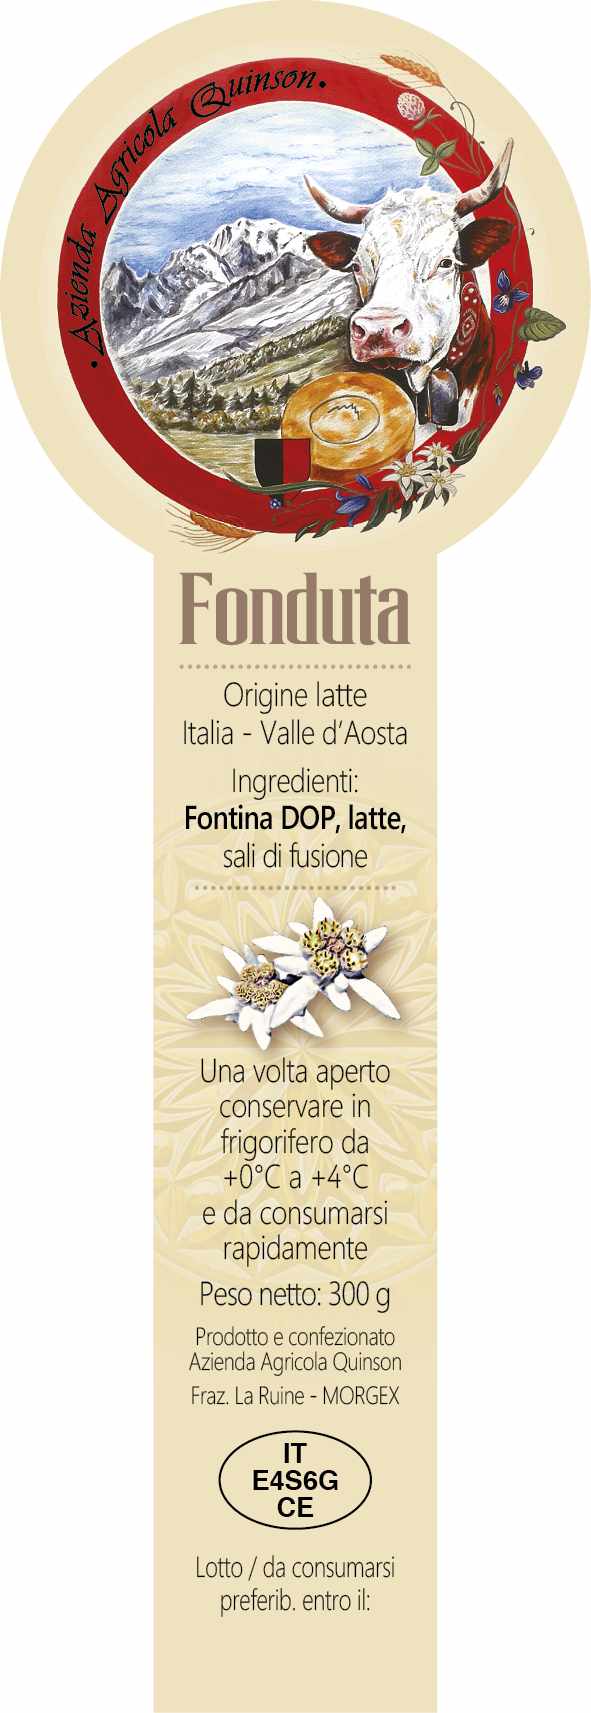 fonduta-etichetta-quinson